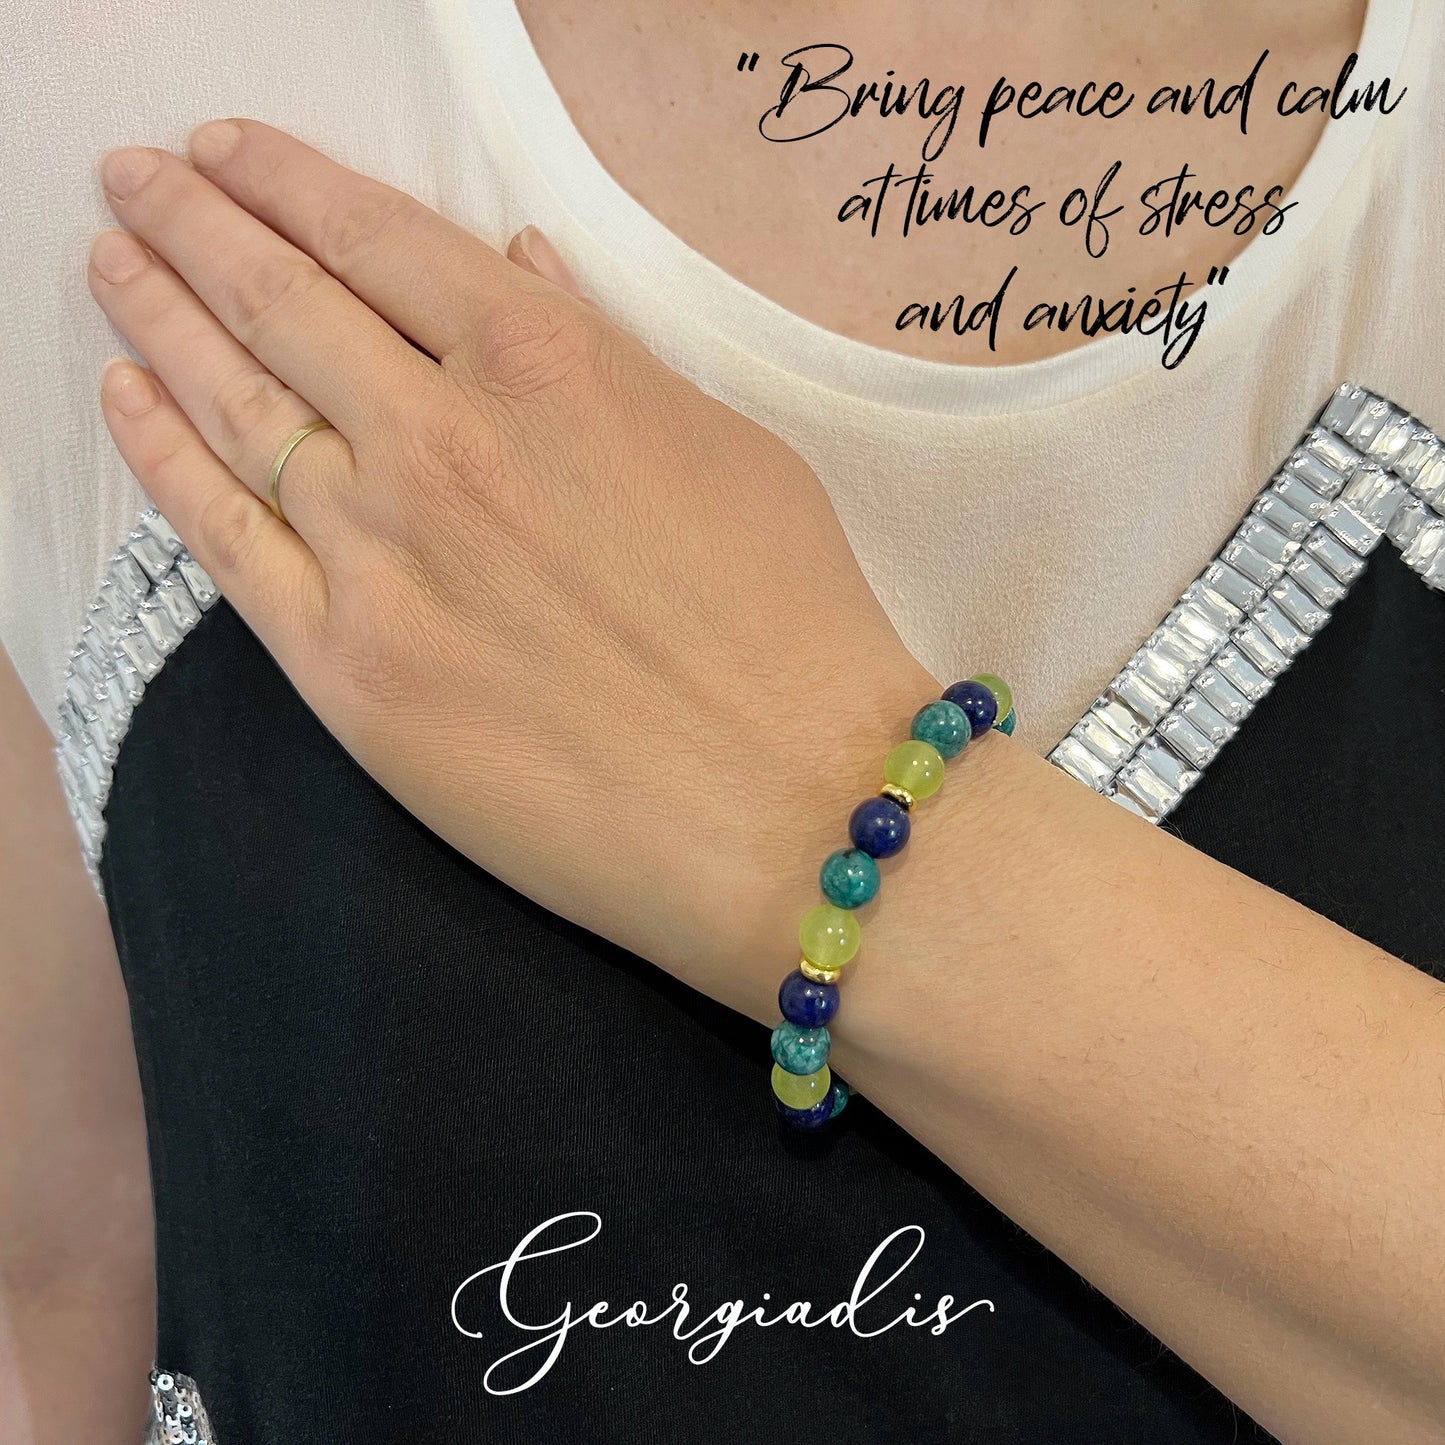 Beautiful Bracelet, Blue 8mm Lapis Lazuli, African Jasper, Light Green Jade Gemstones with 18k Gold-Plating, Crystal Healing Stones, Self-Confidence.